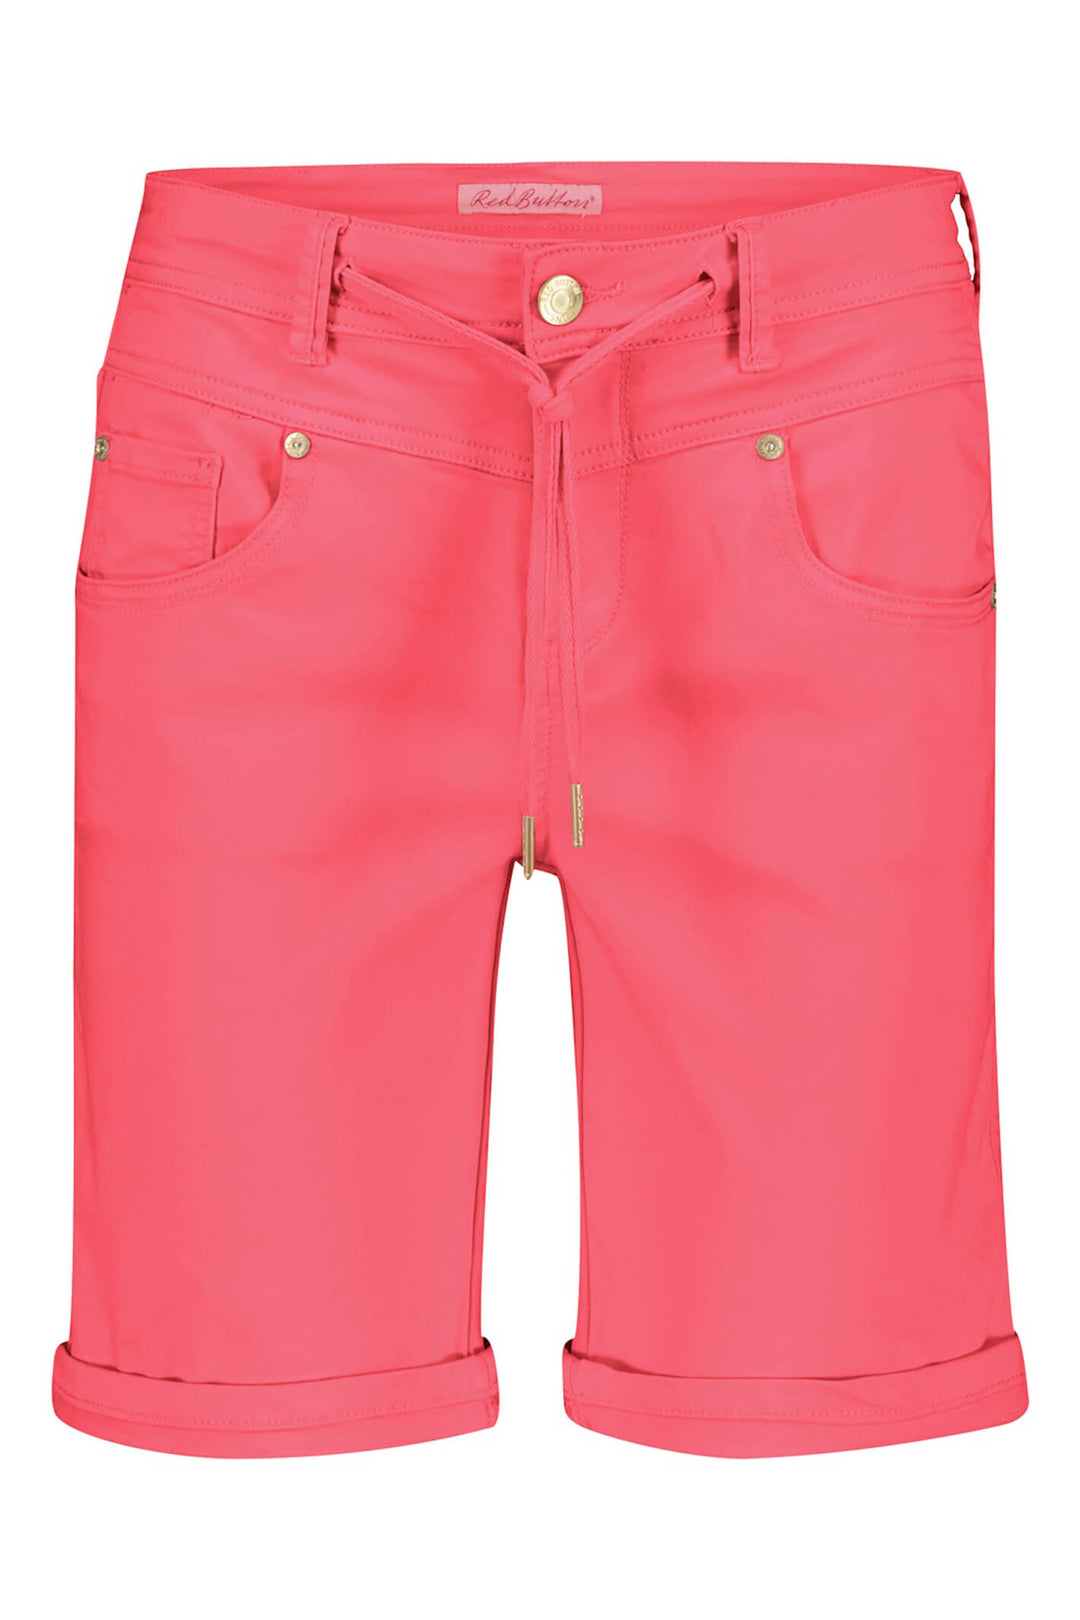 Red Button SRB3991 Relax Raspberry Pink Jog Shorts - Olivia Grace Fashion